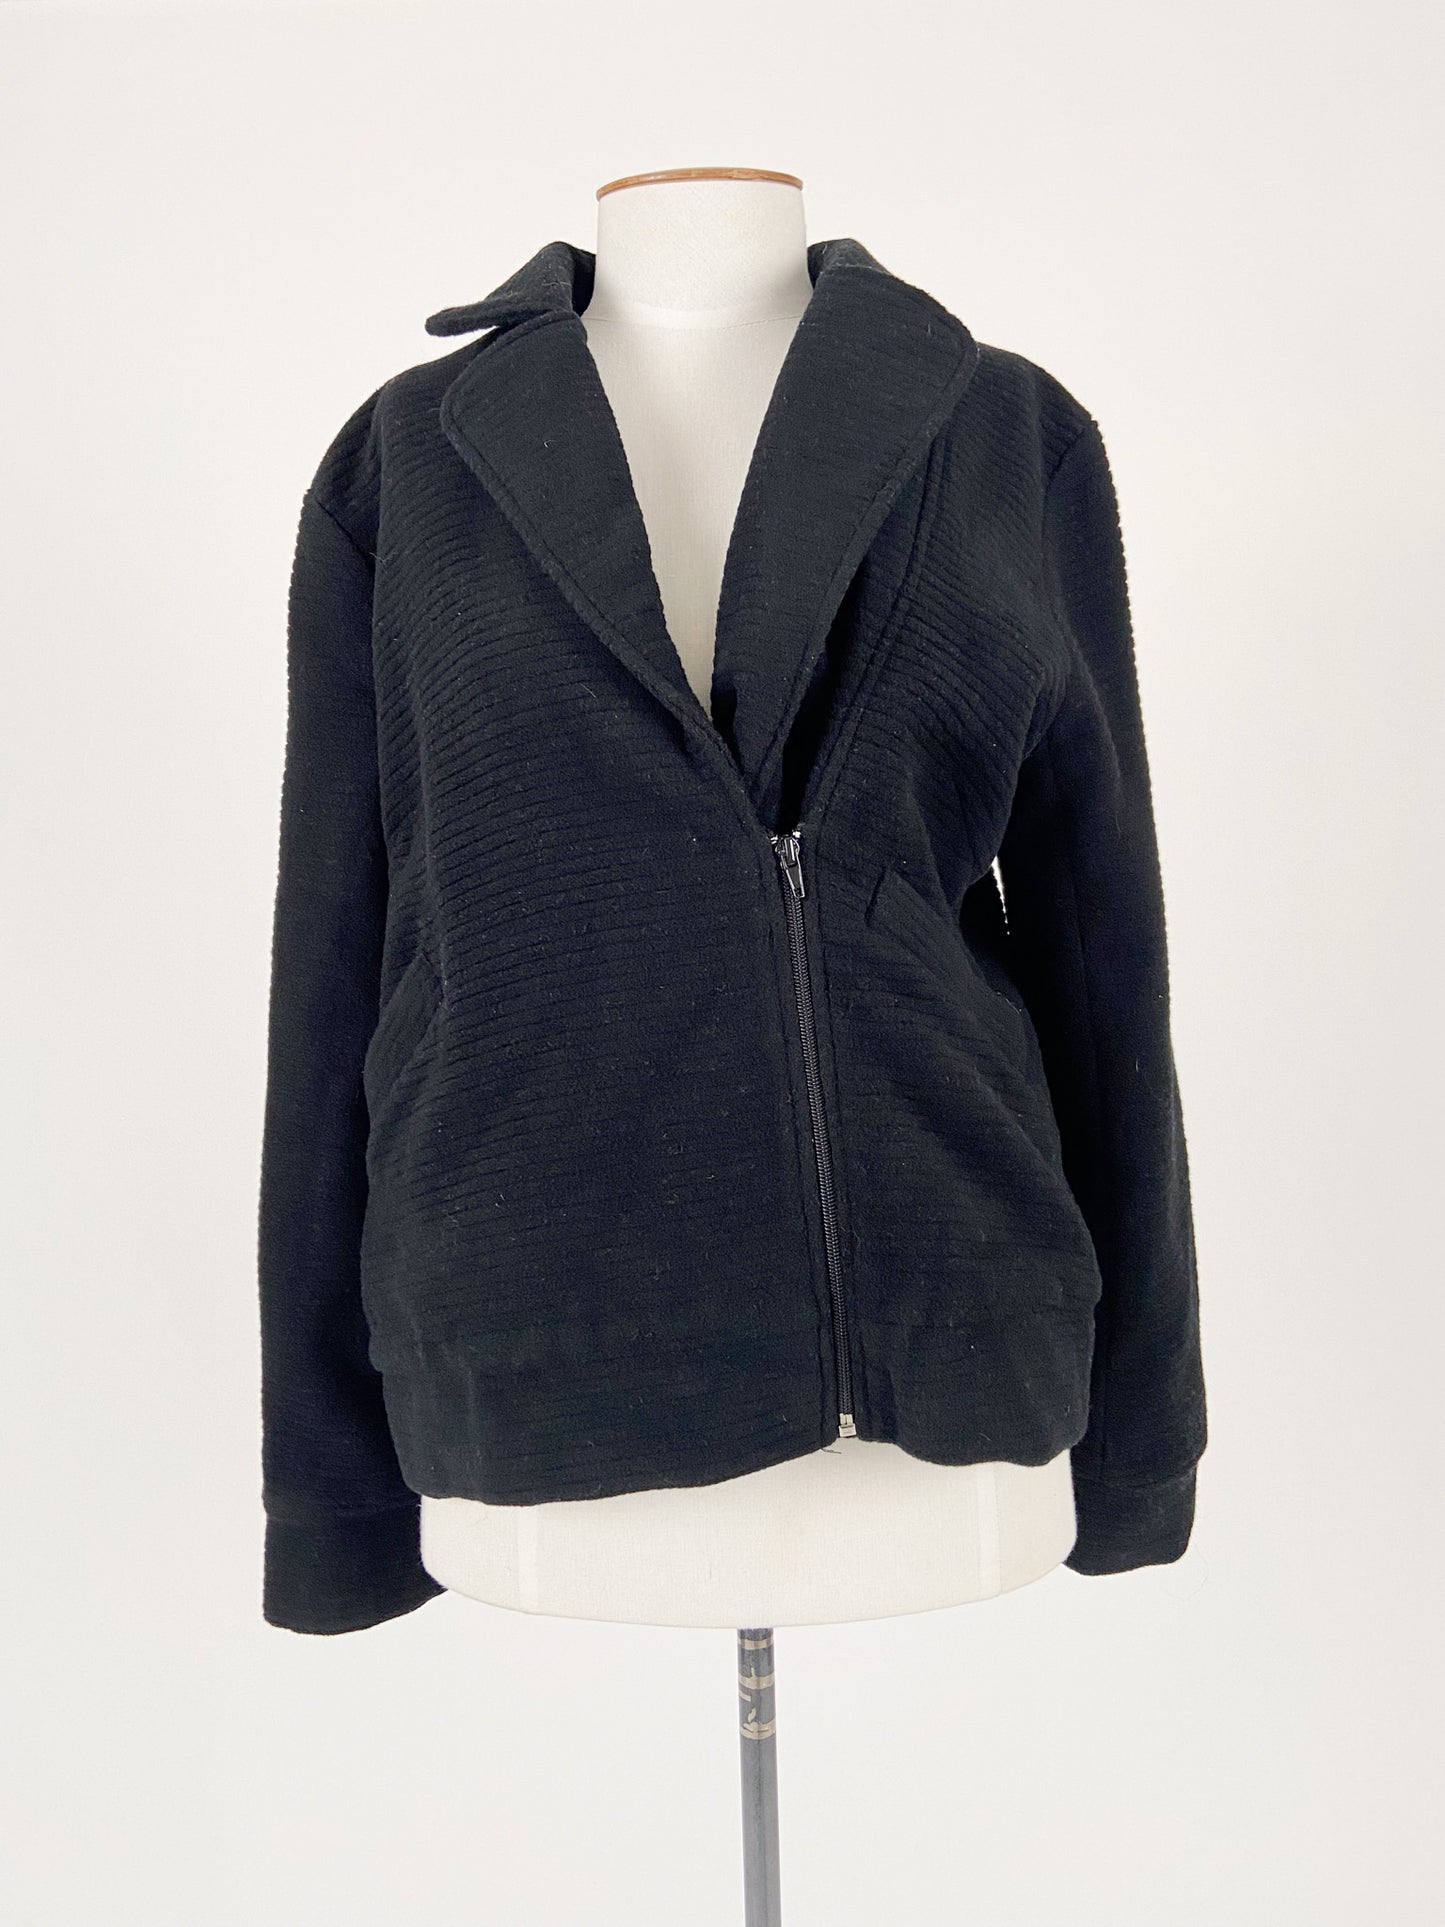 BLAK | Black Casual/Workwear Jacket | Size 10